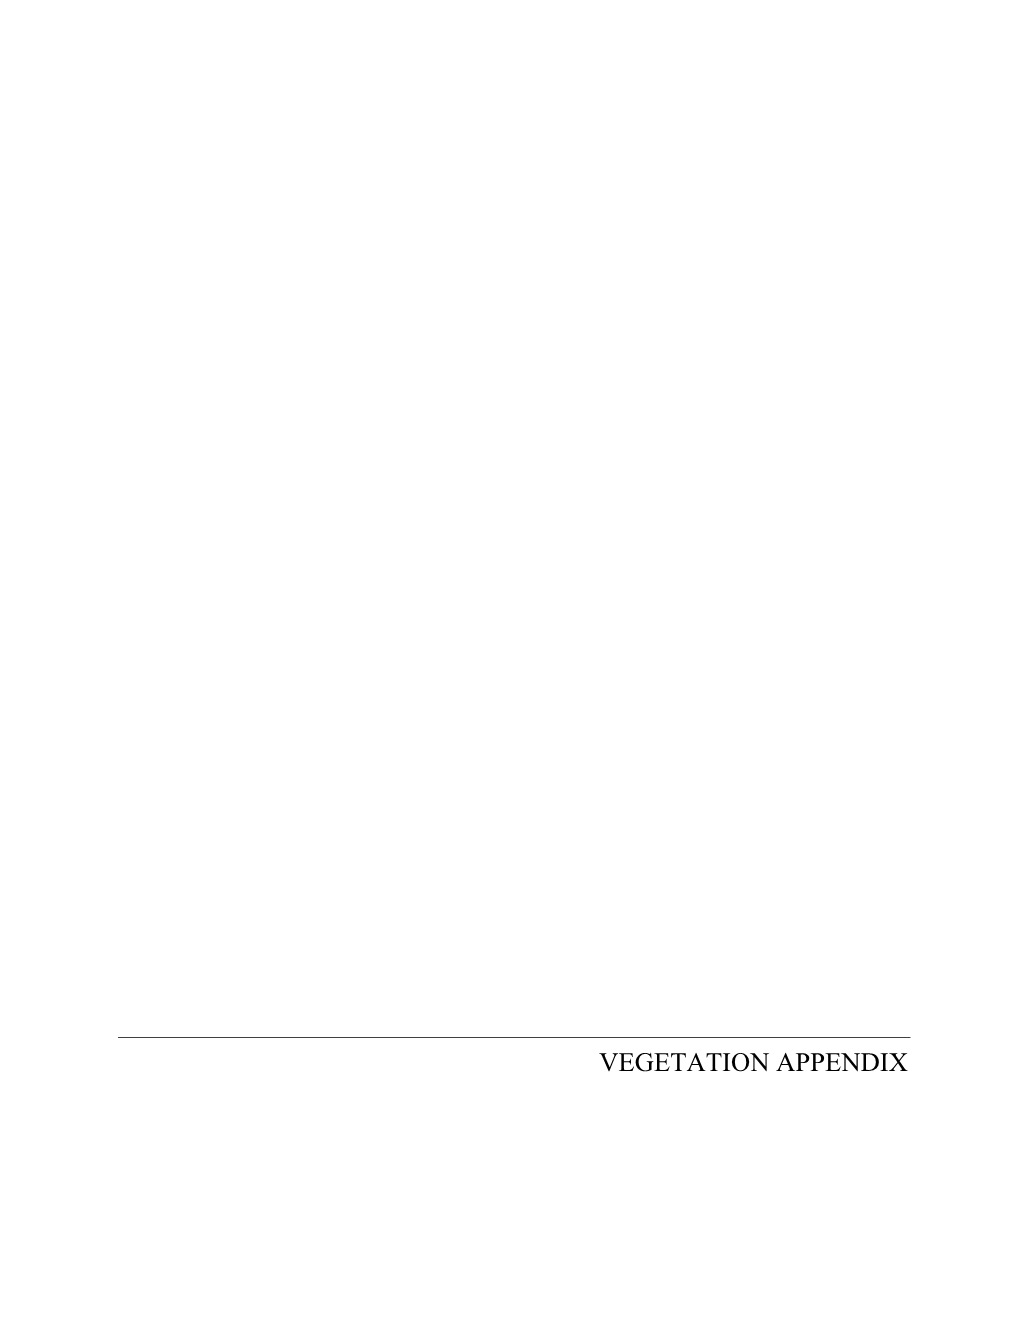 Vegetation Appendix Vegetation Appendix